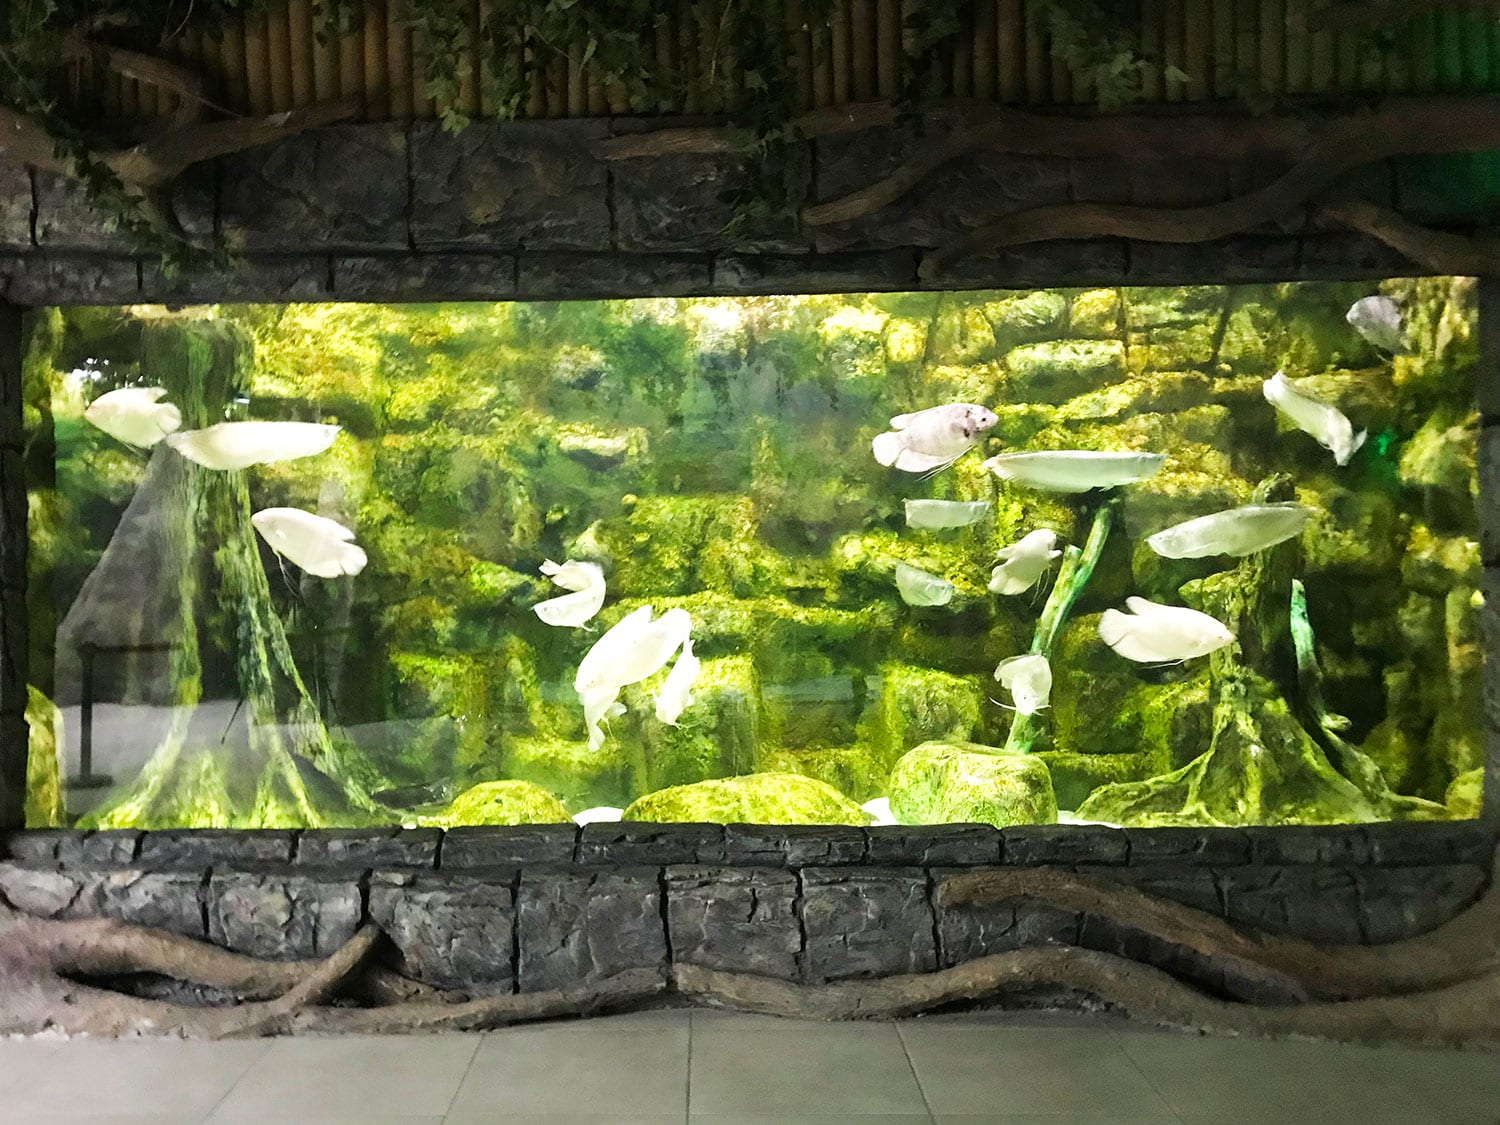 The Largest Aquarium Tunnel In Iran Opens In Bandar E Anzali